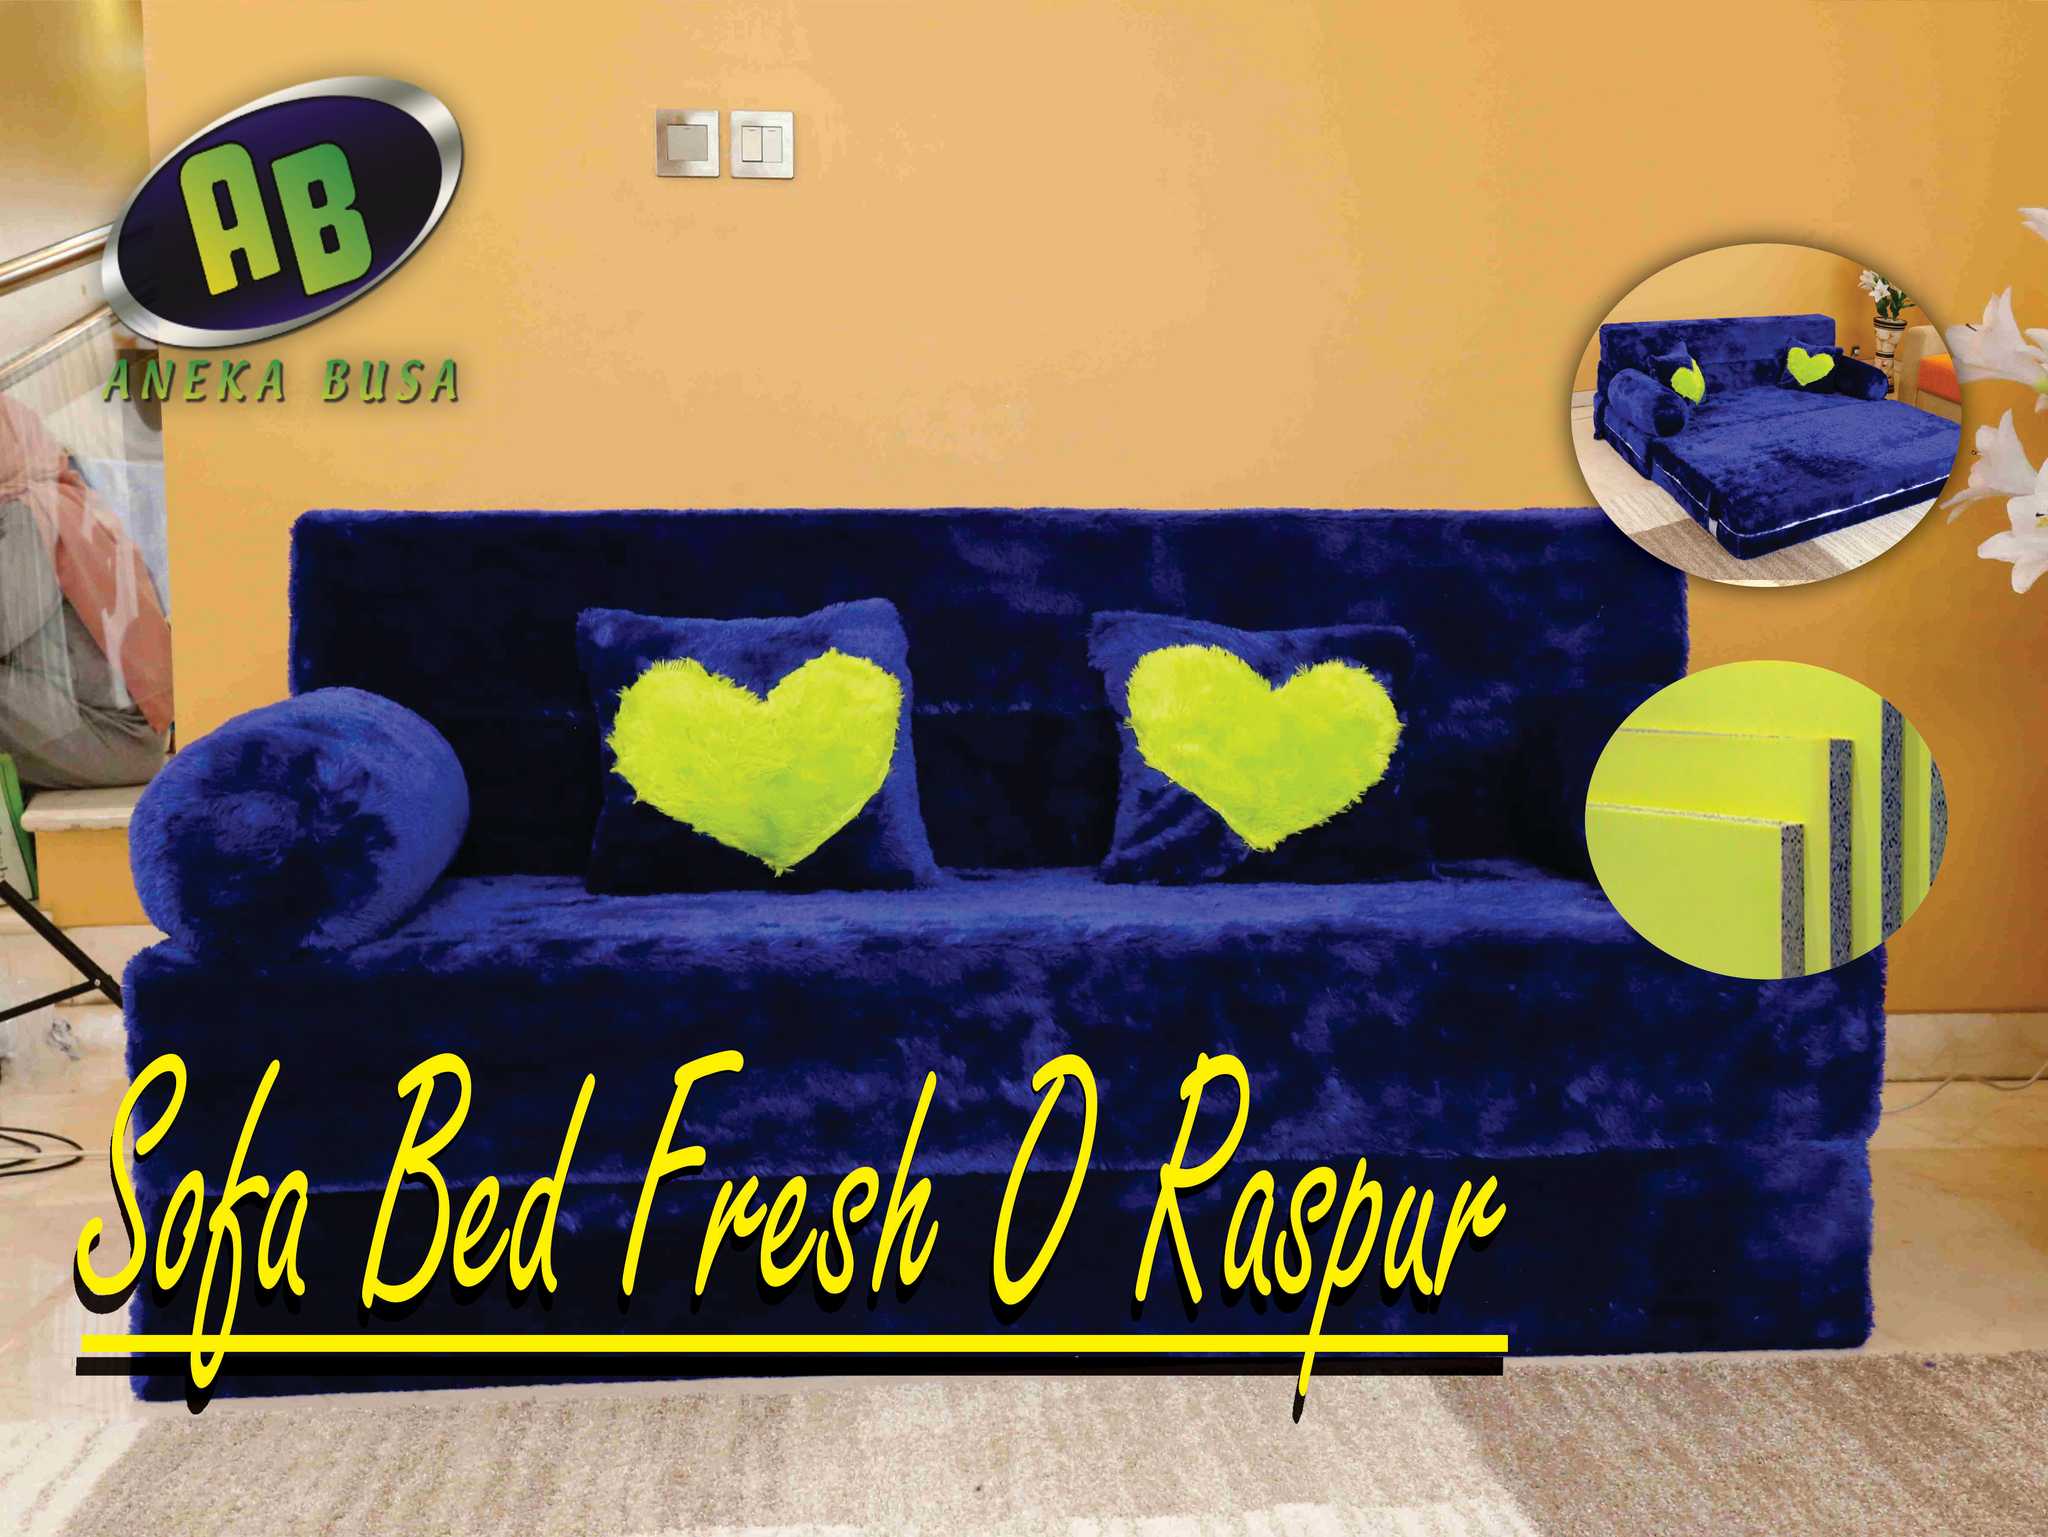 Sofa Bed fresh O